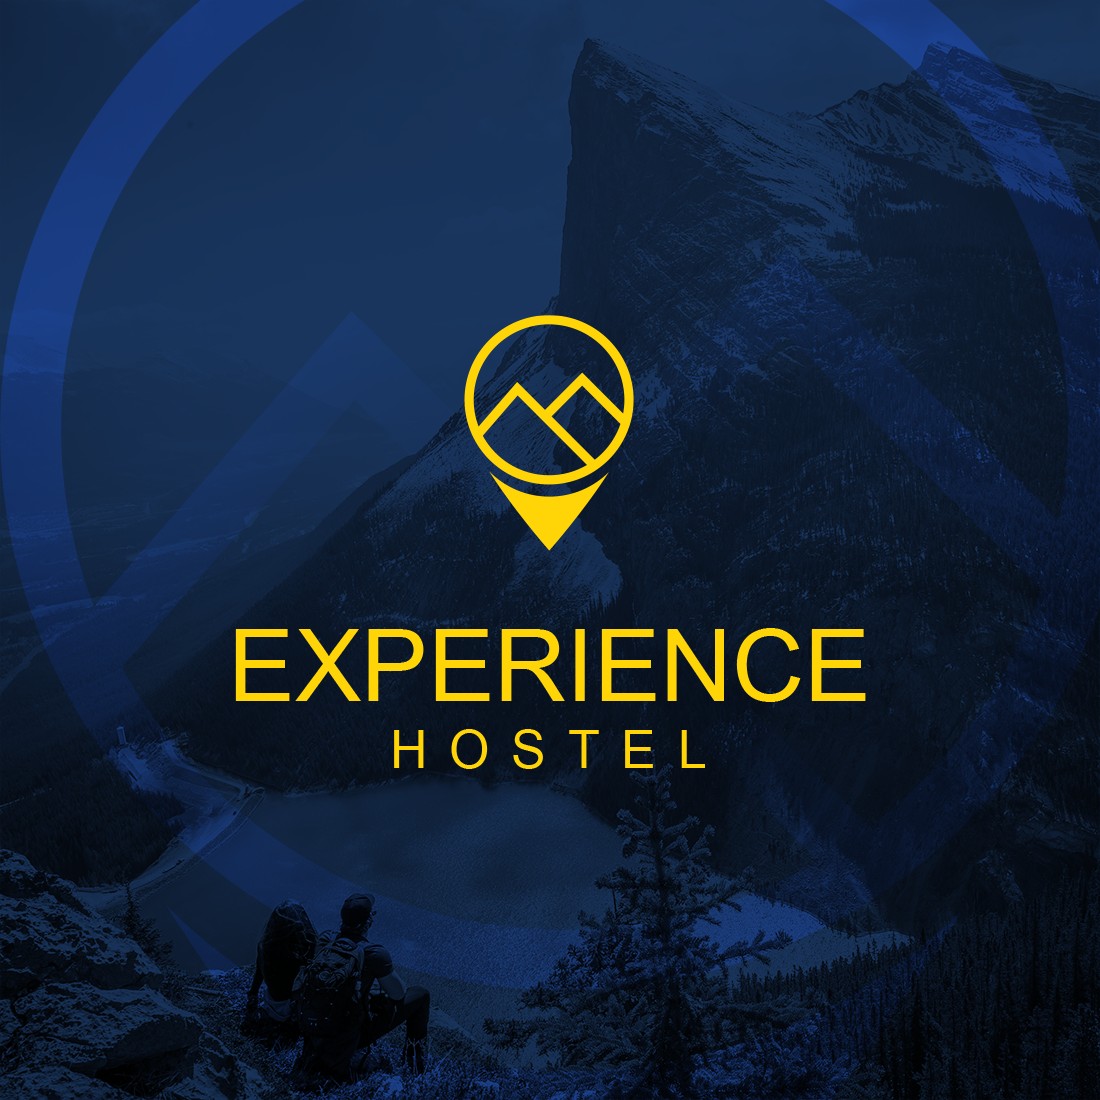 Experience Hostel Logo Design. (Adventure, Nature, Tourist Place) cover image.